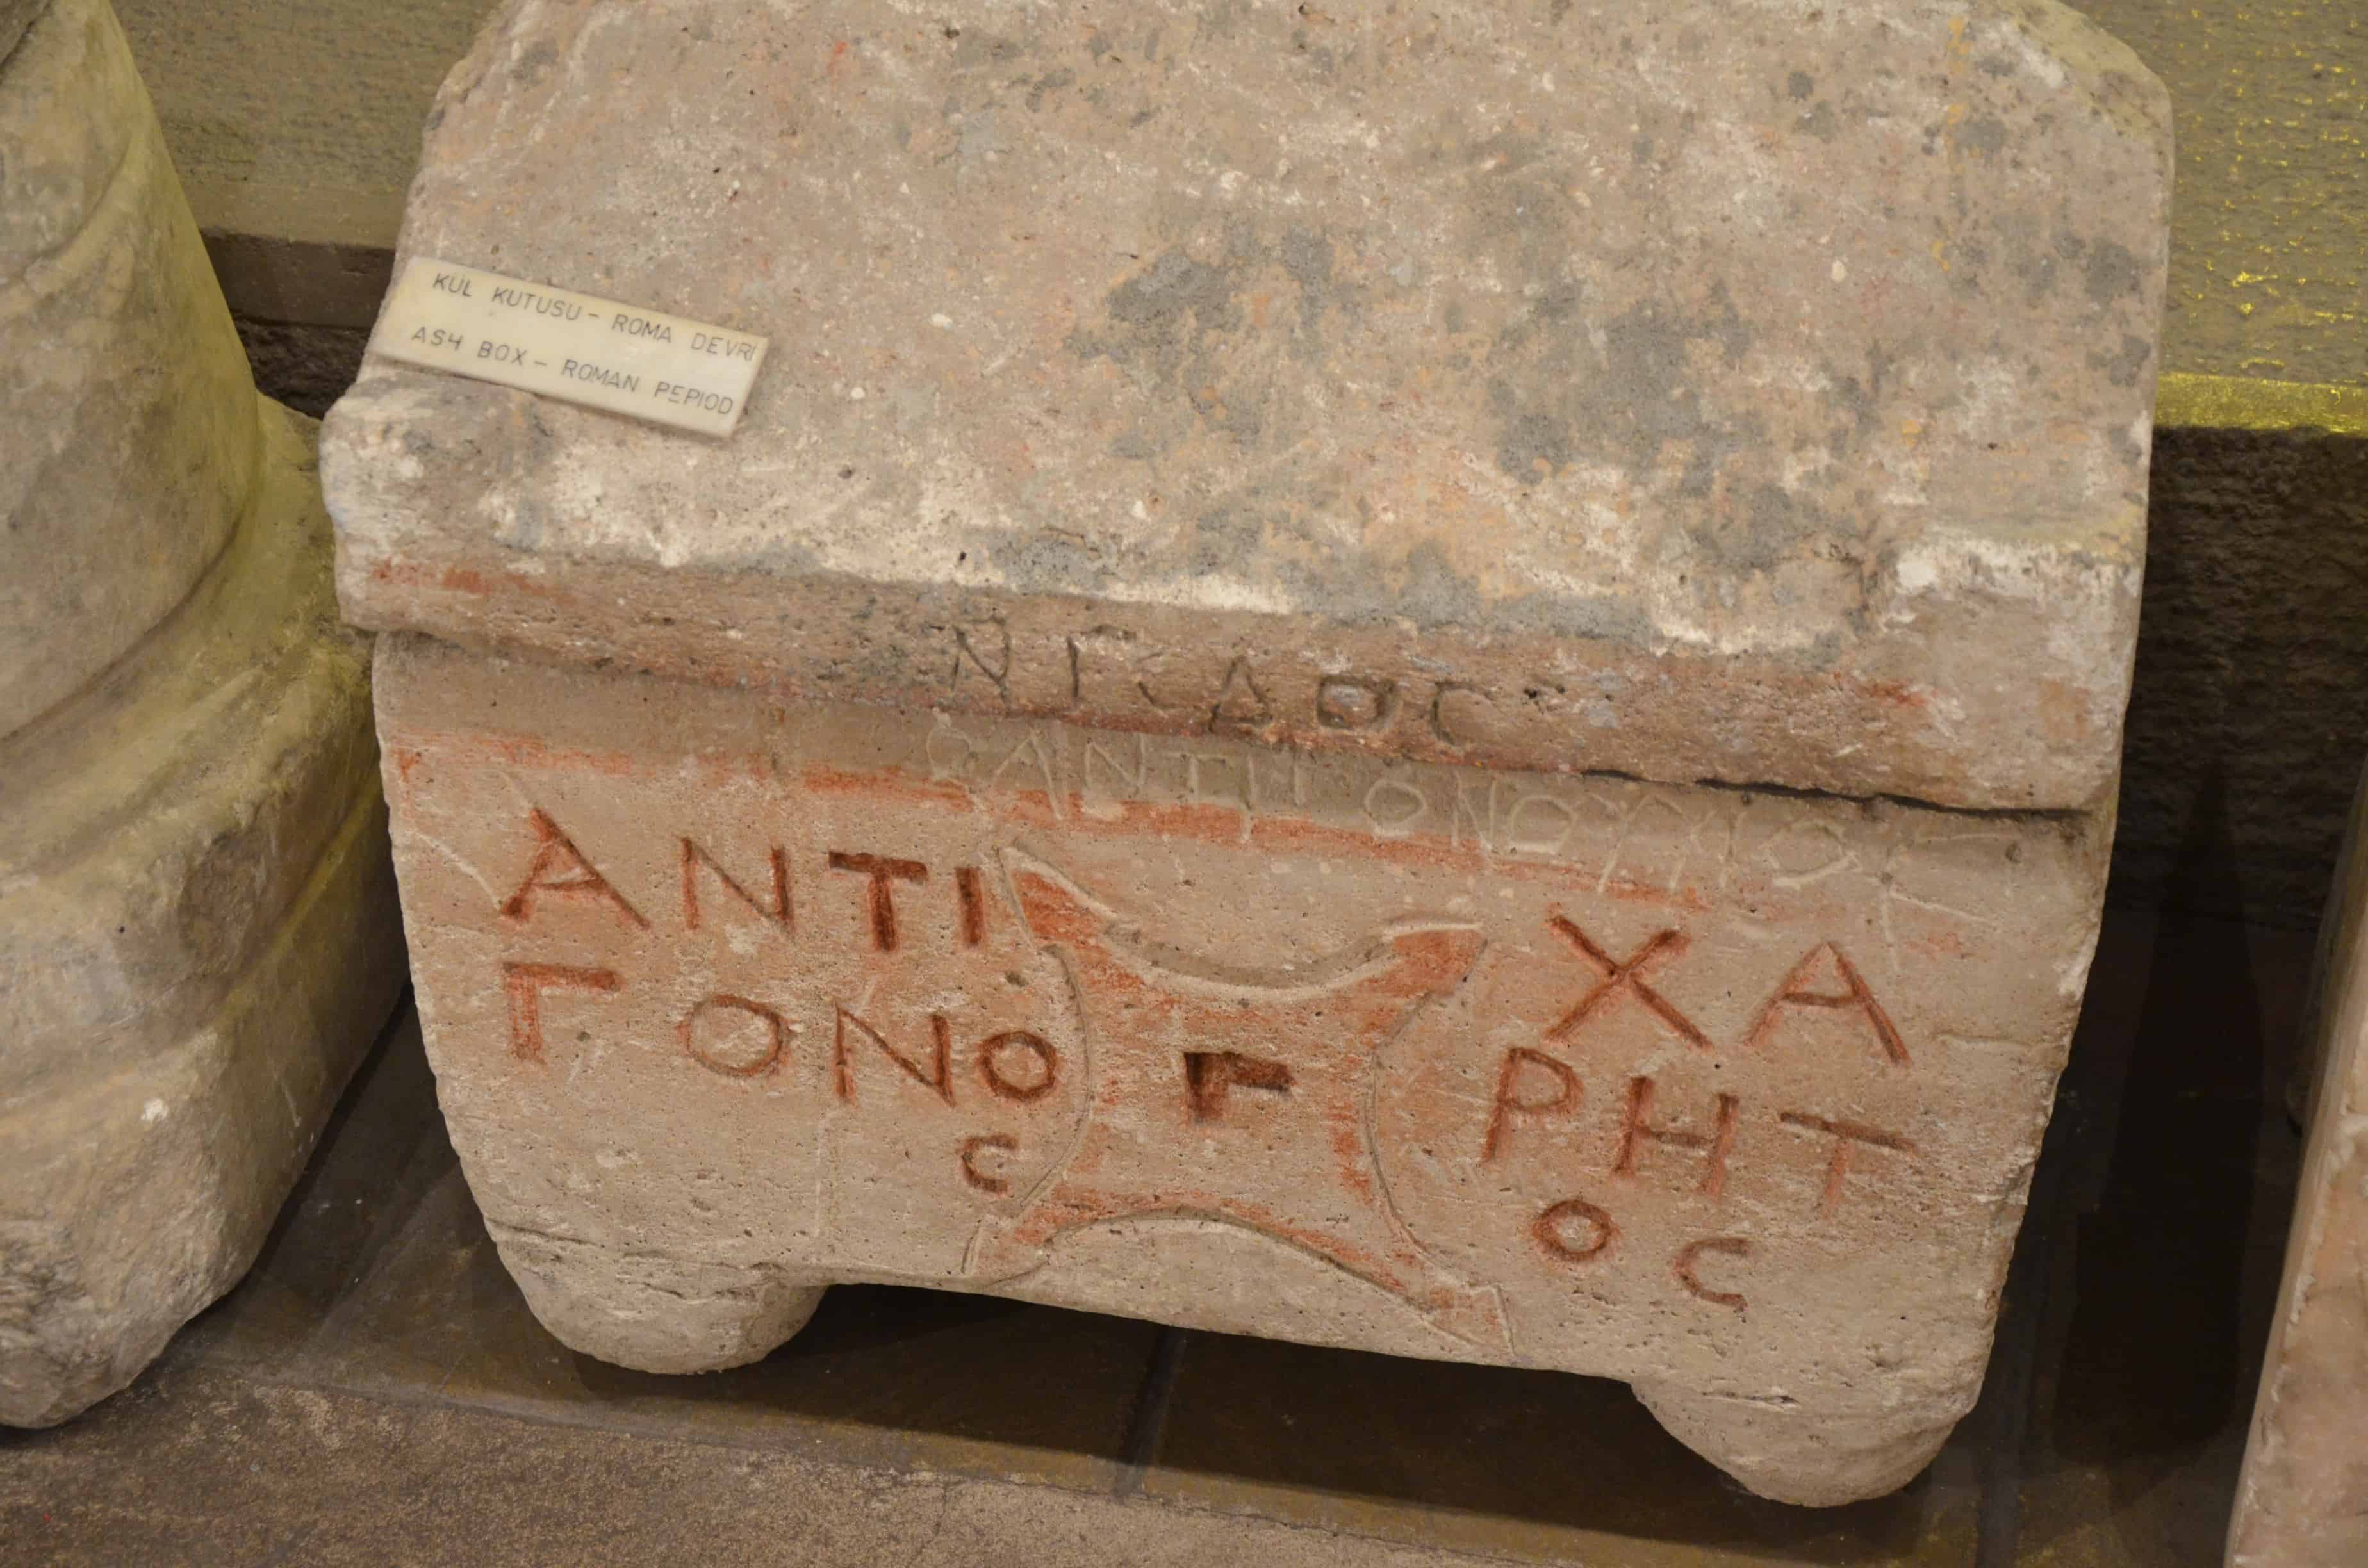 Ash box at Konya Arkeoloji Müzesi in Konya, Turkey